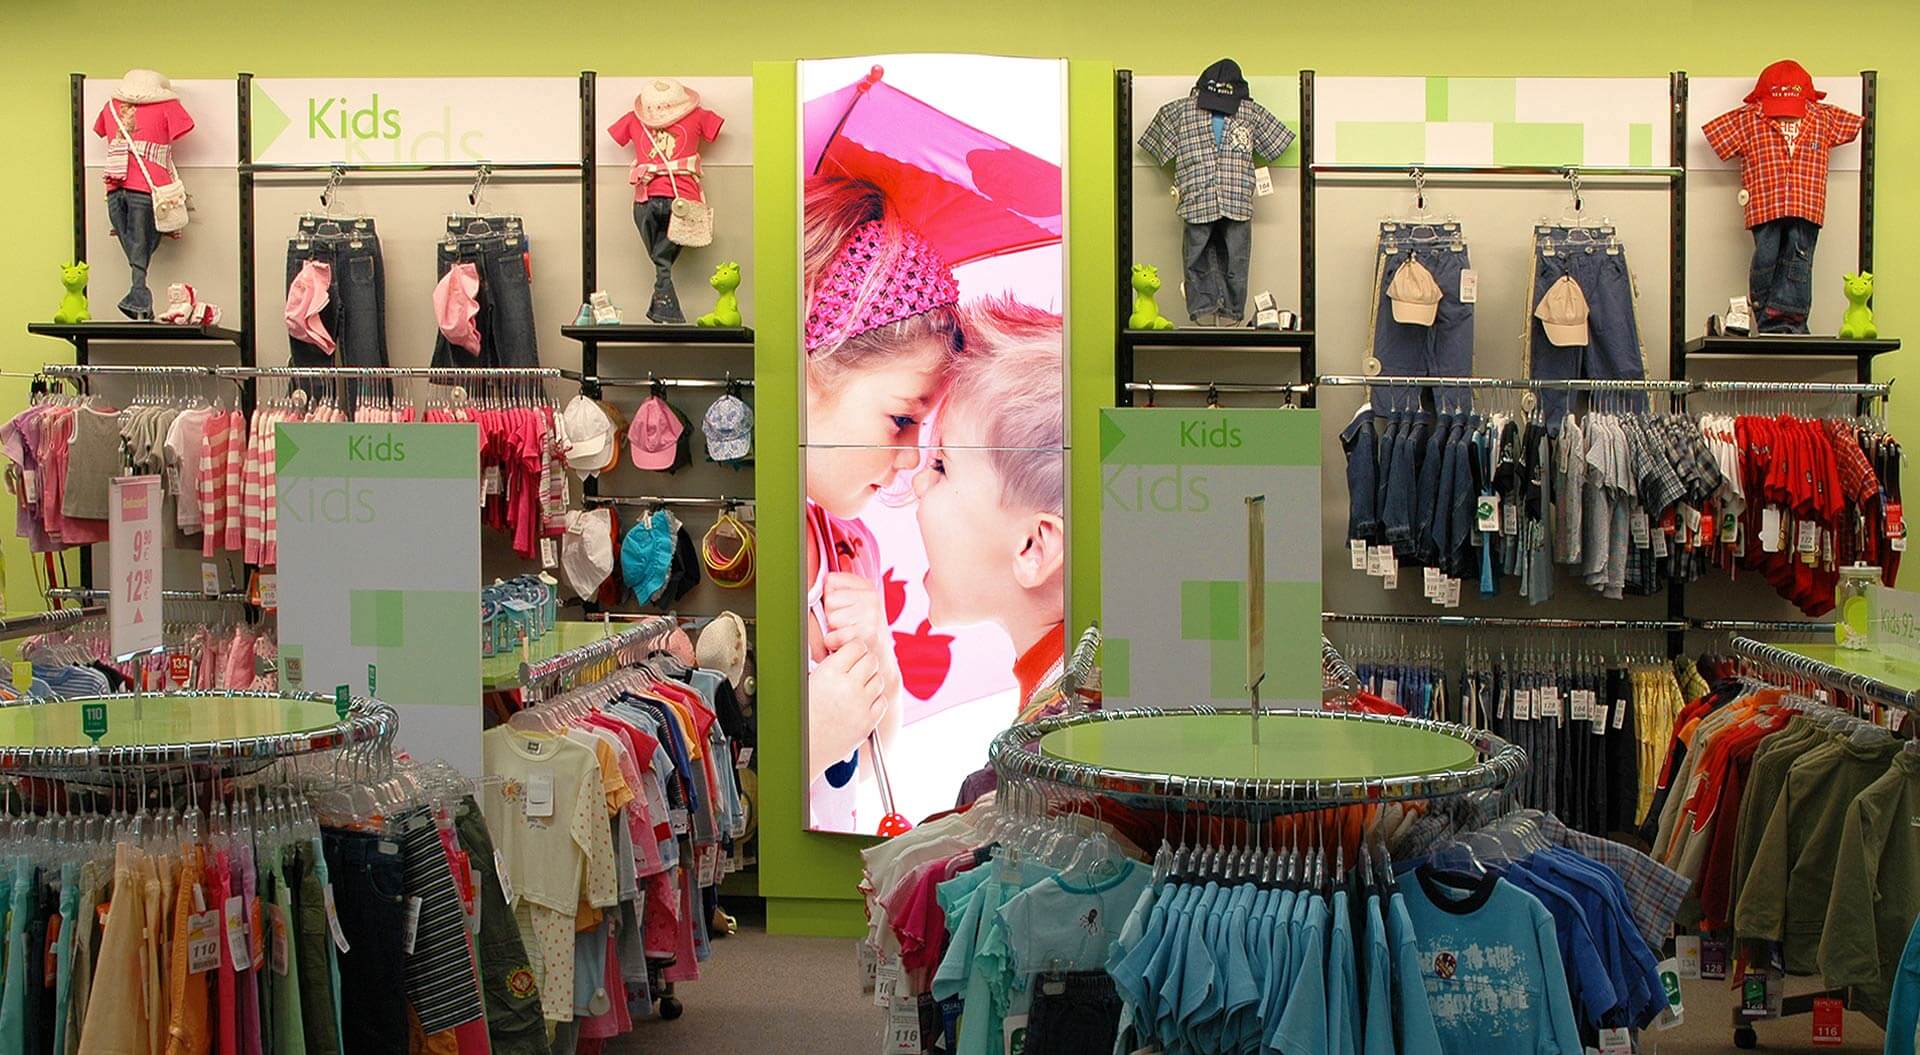  Adler Fashion Store Germany best retail store design, rebrand and merchandising Kids wear department